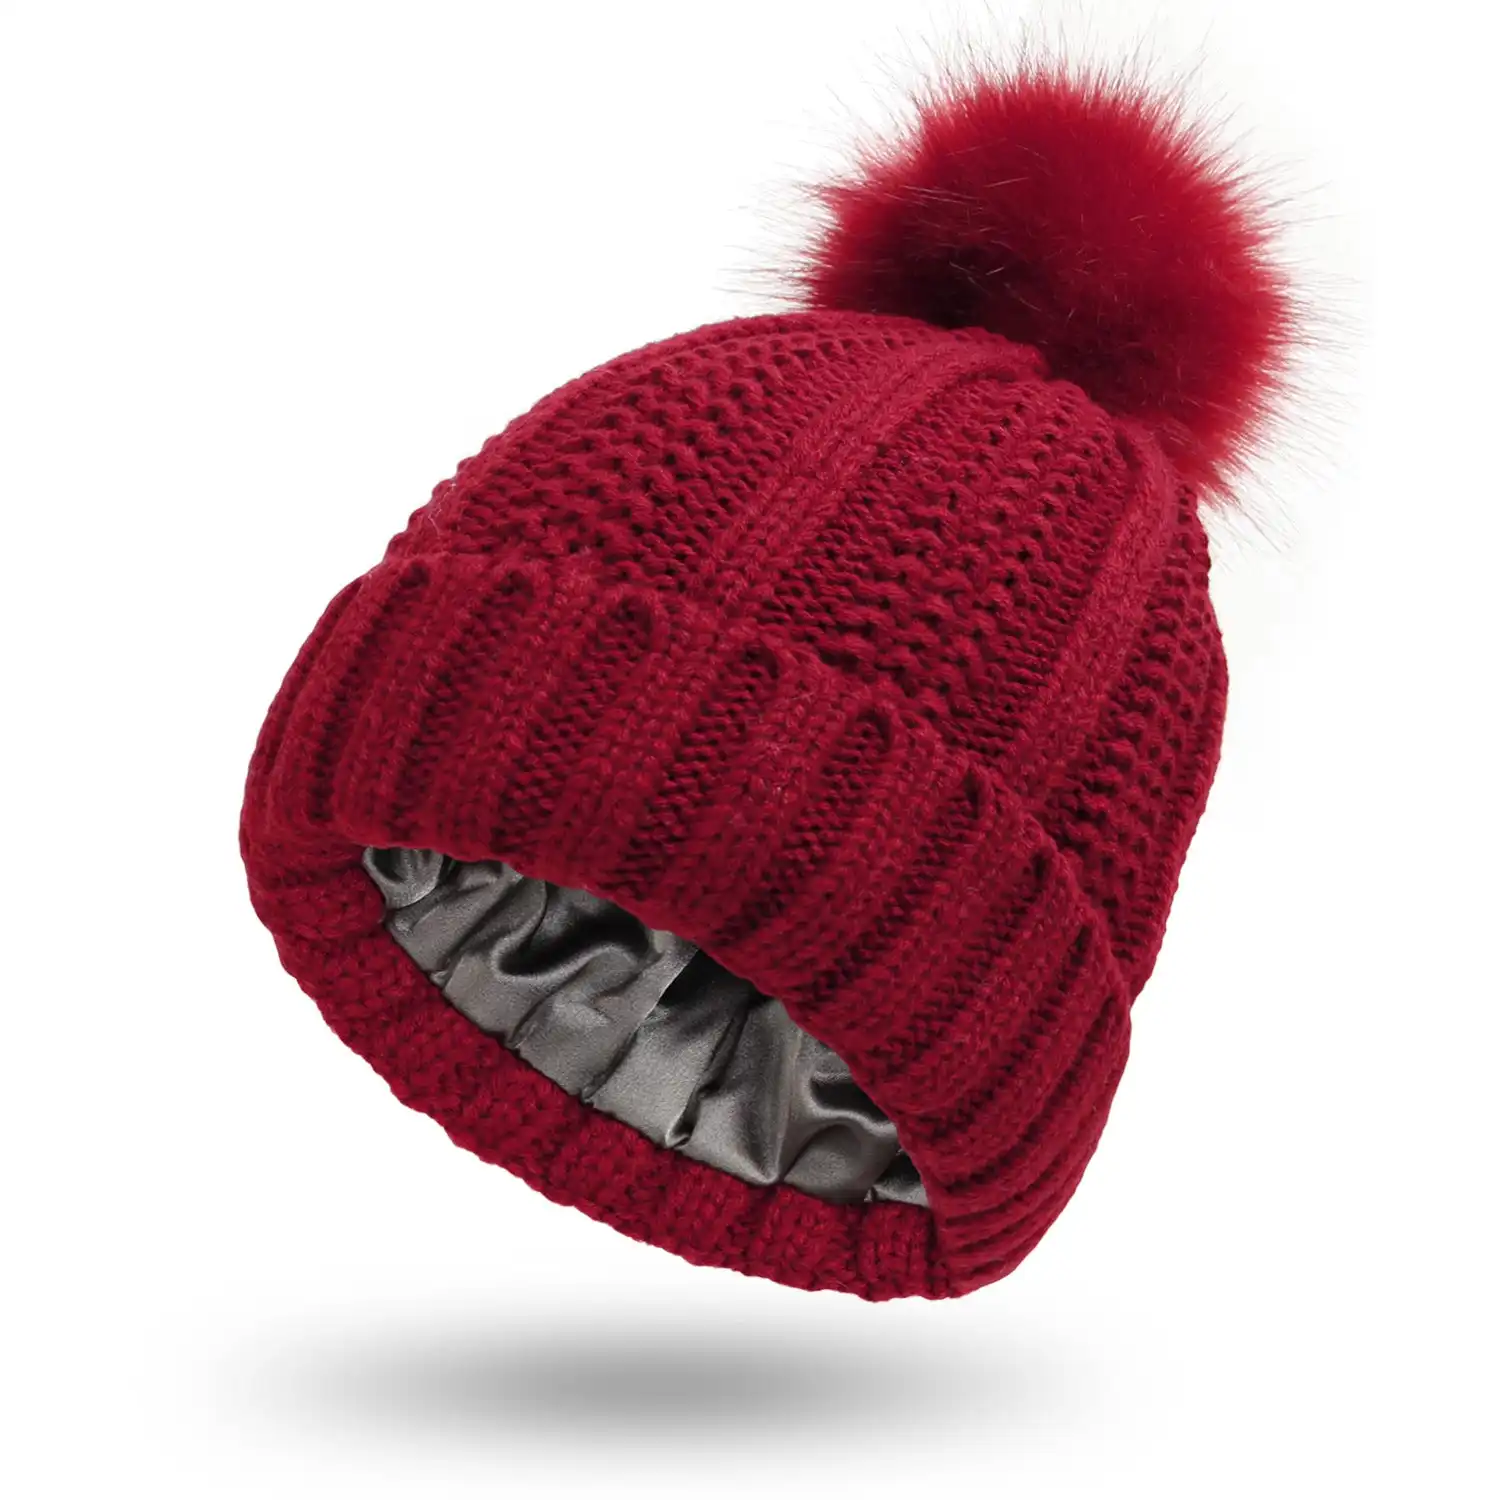 Wholesale customized winter hats knitted unisex women men warm hat beanie